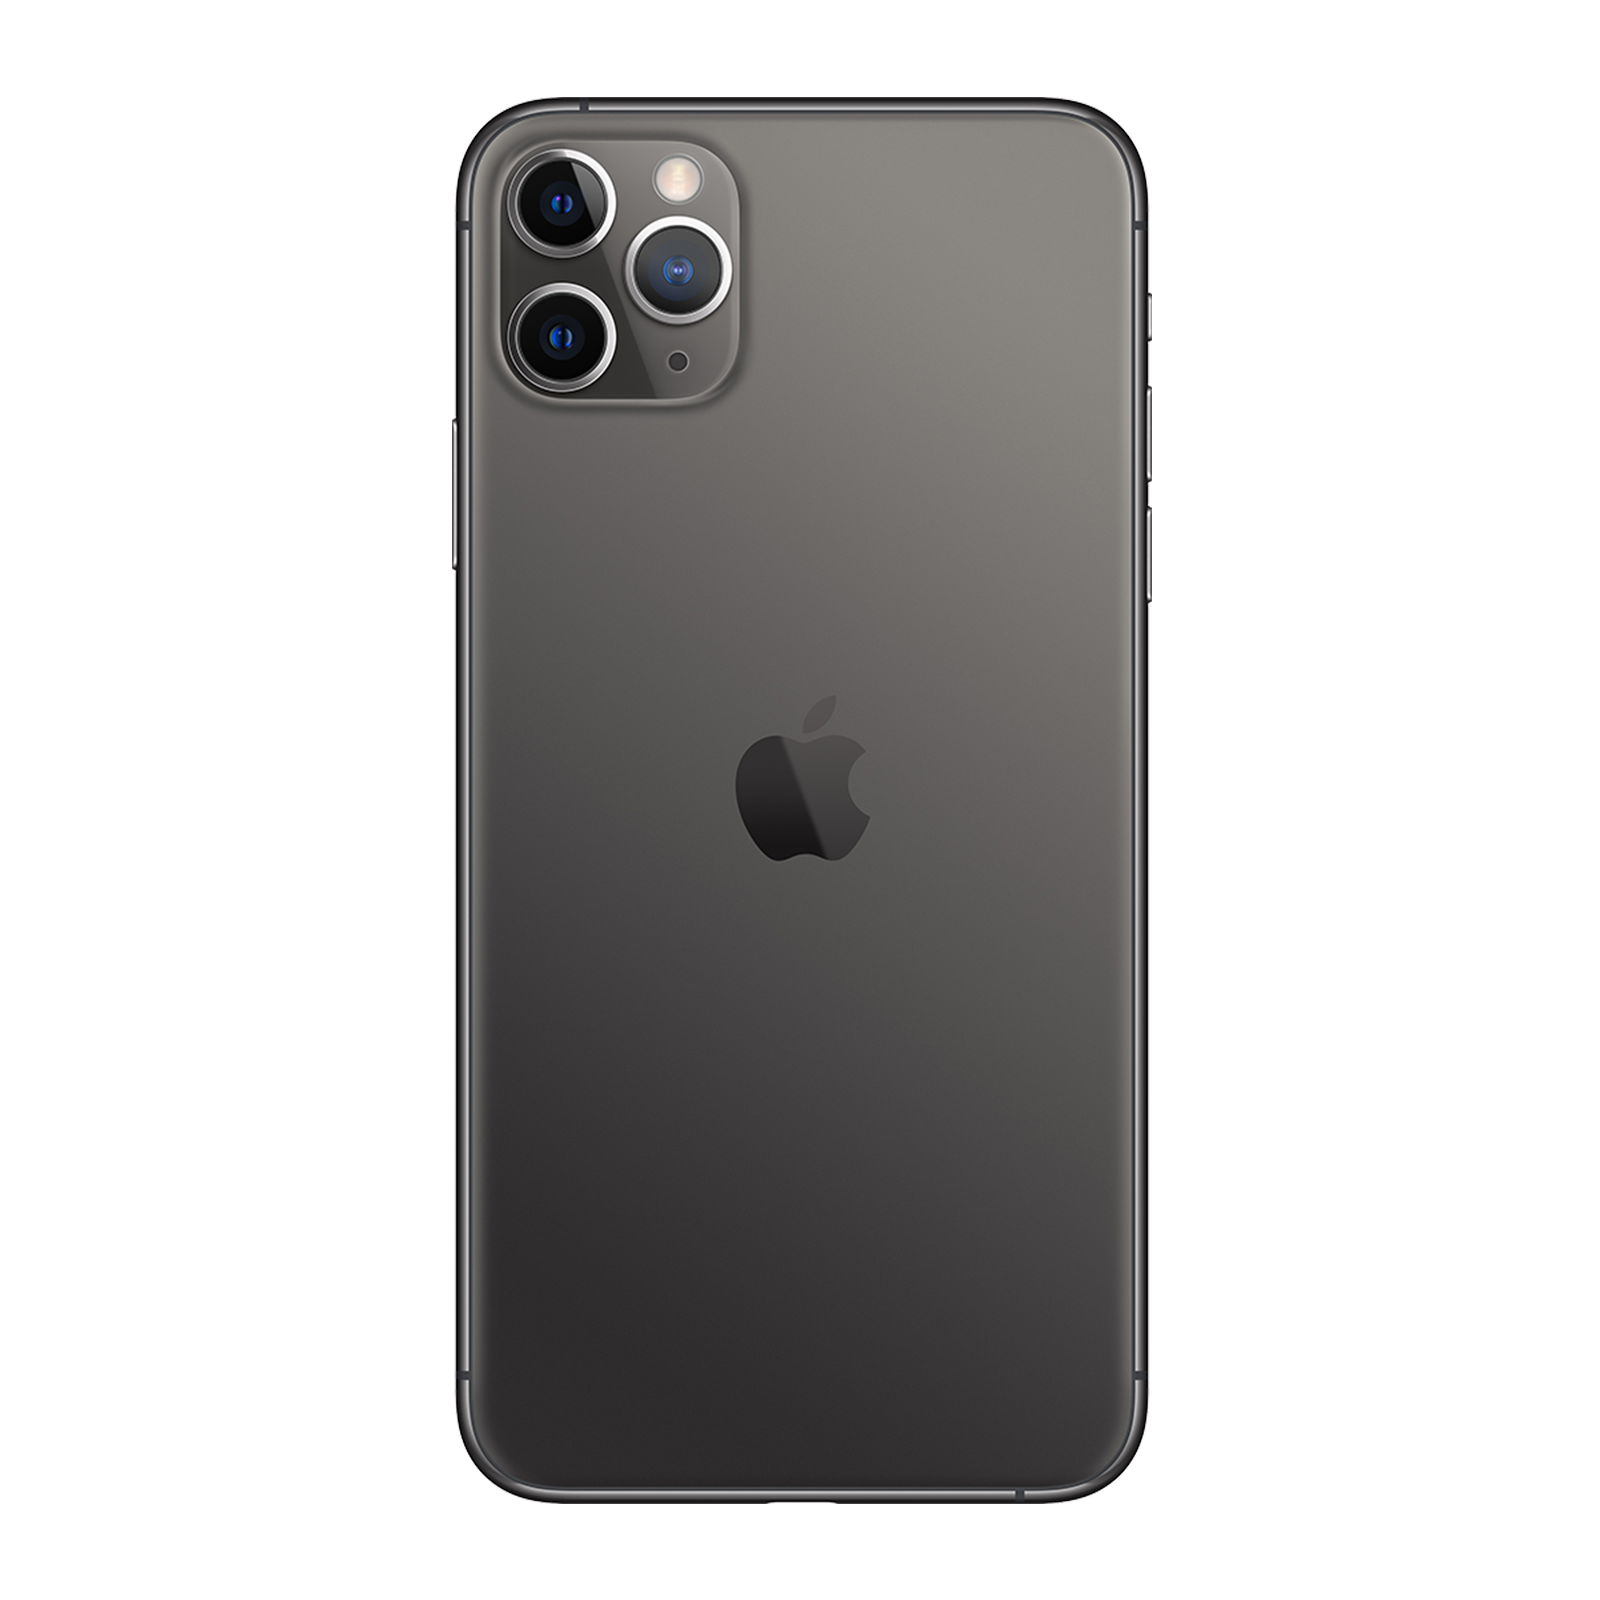 Apple iPhone 11 Pro 256GB Space Grey Good - Unlocked